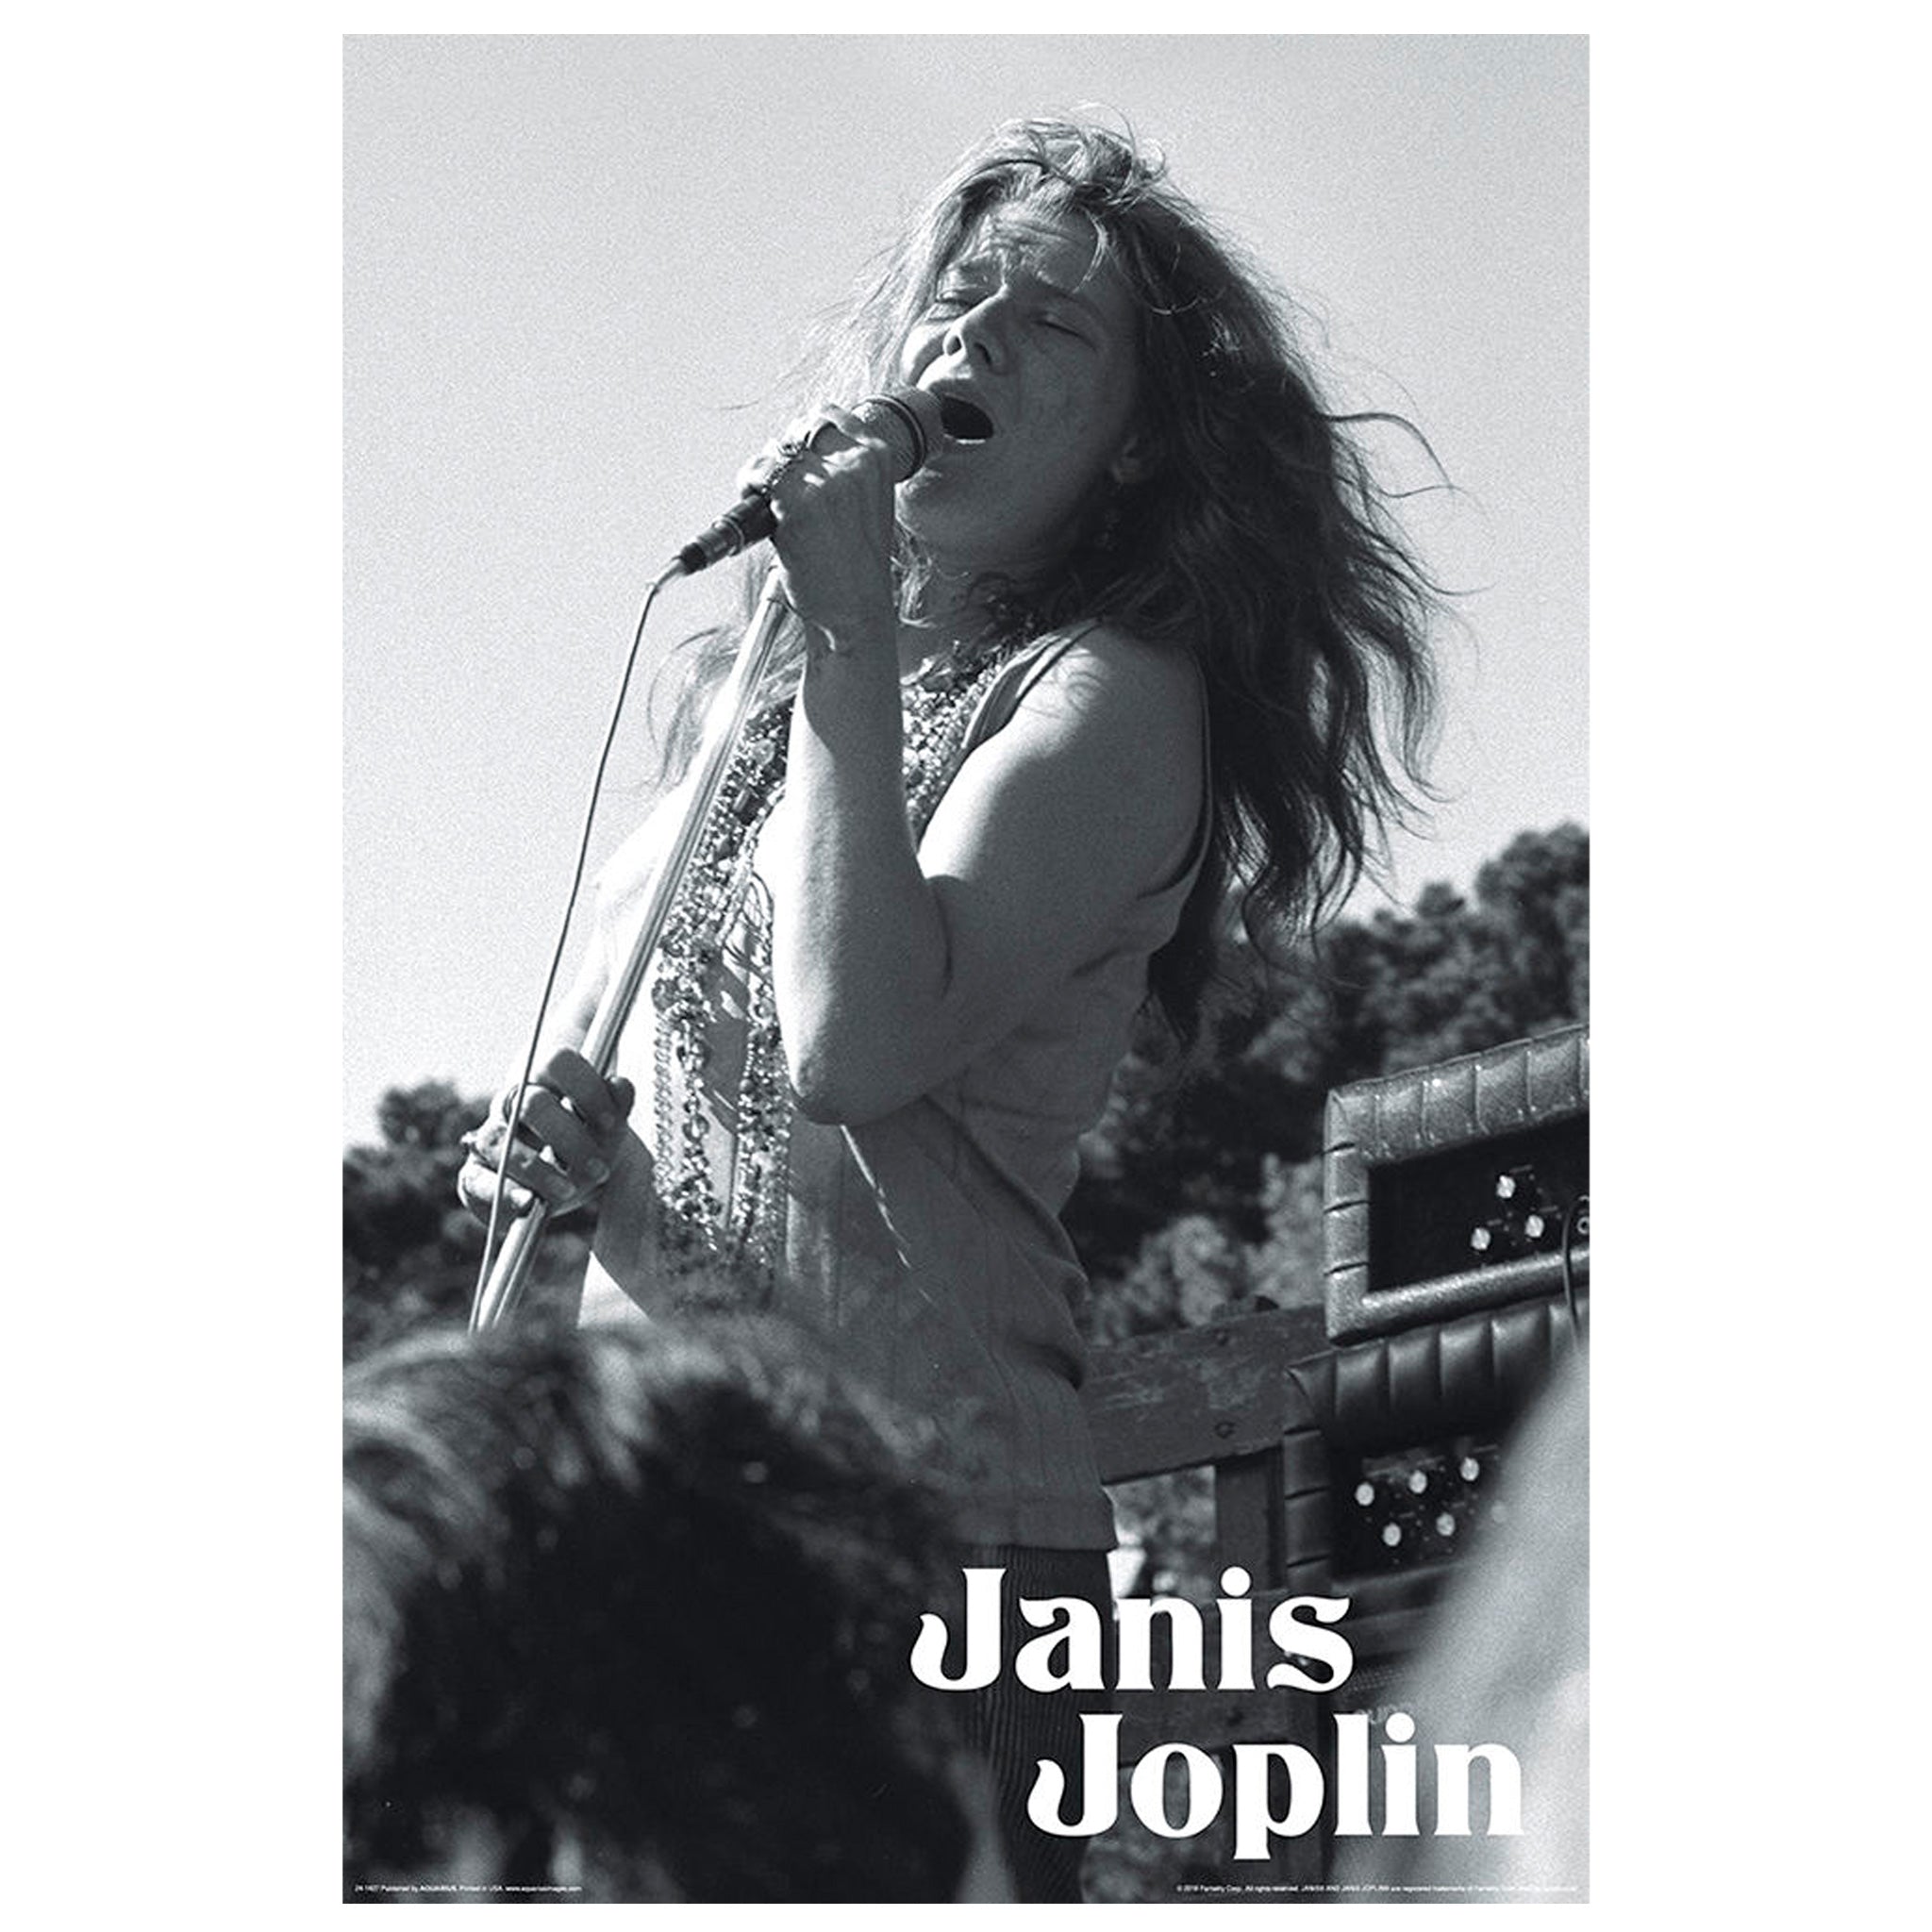 Janis Joplin - The Queen of Psychedelic Soul